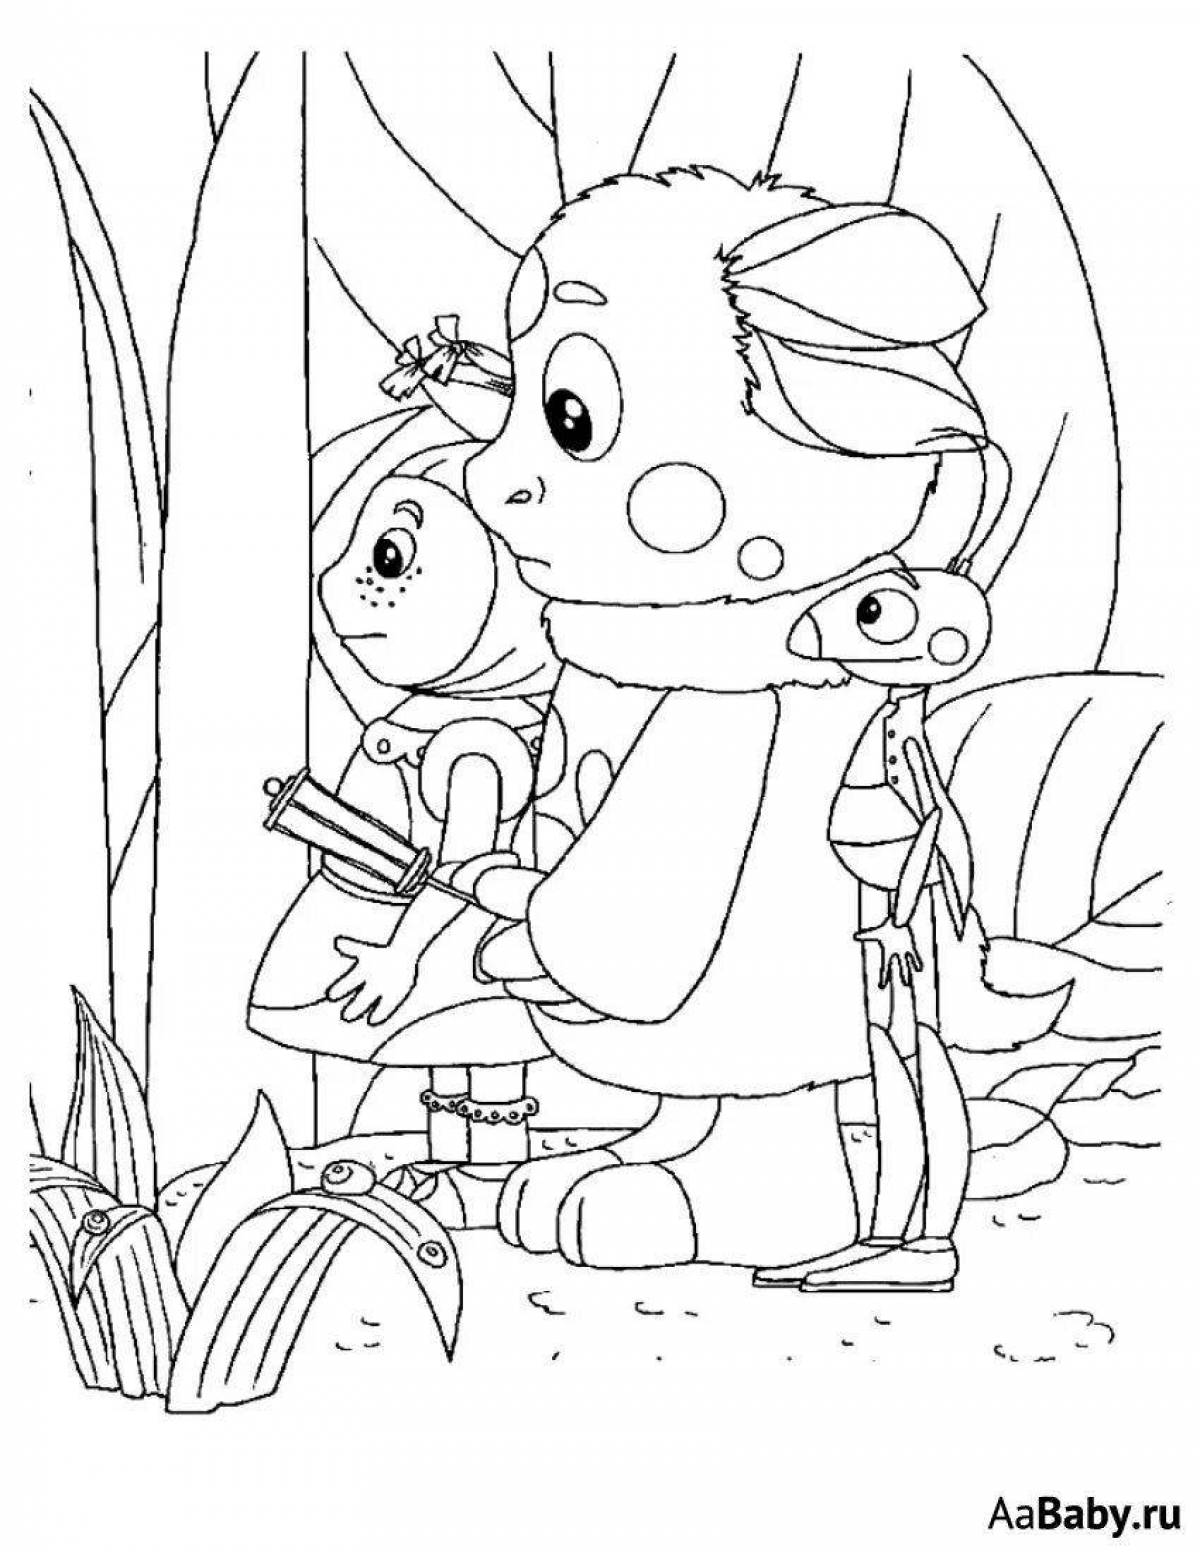 Joyful kuzya coloring book for kids